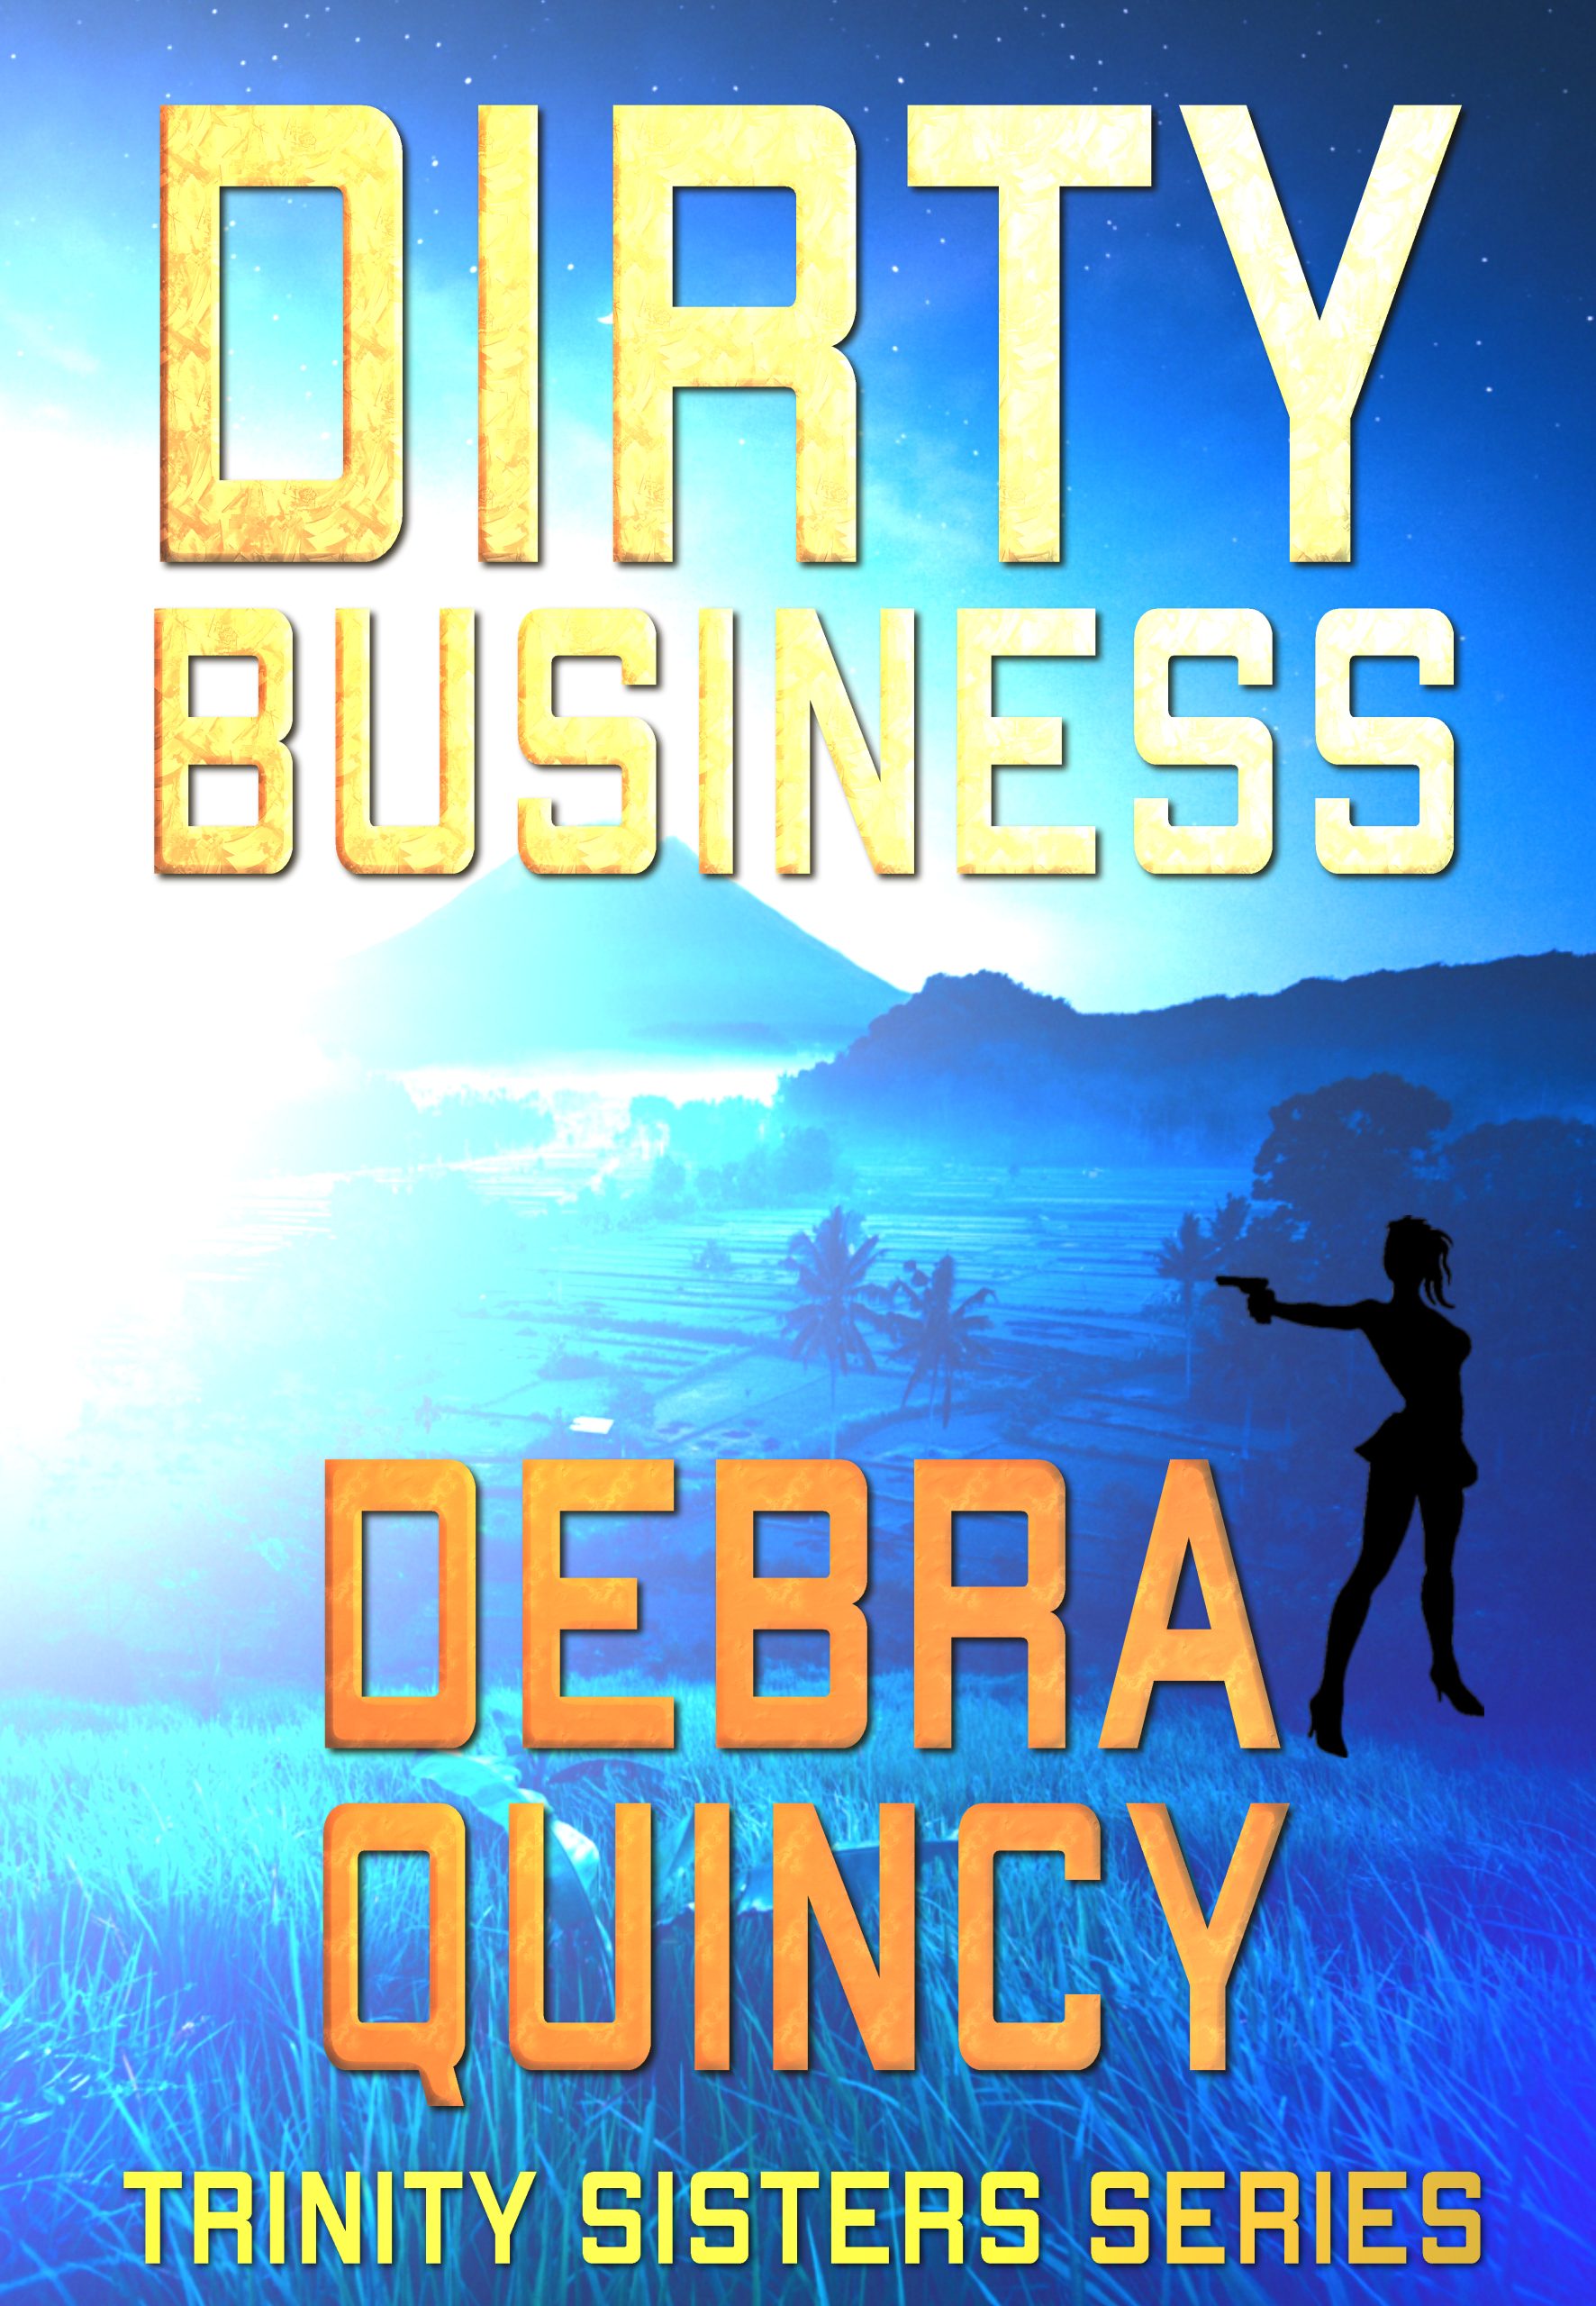 Debra Quincy - Dirty Business Book